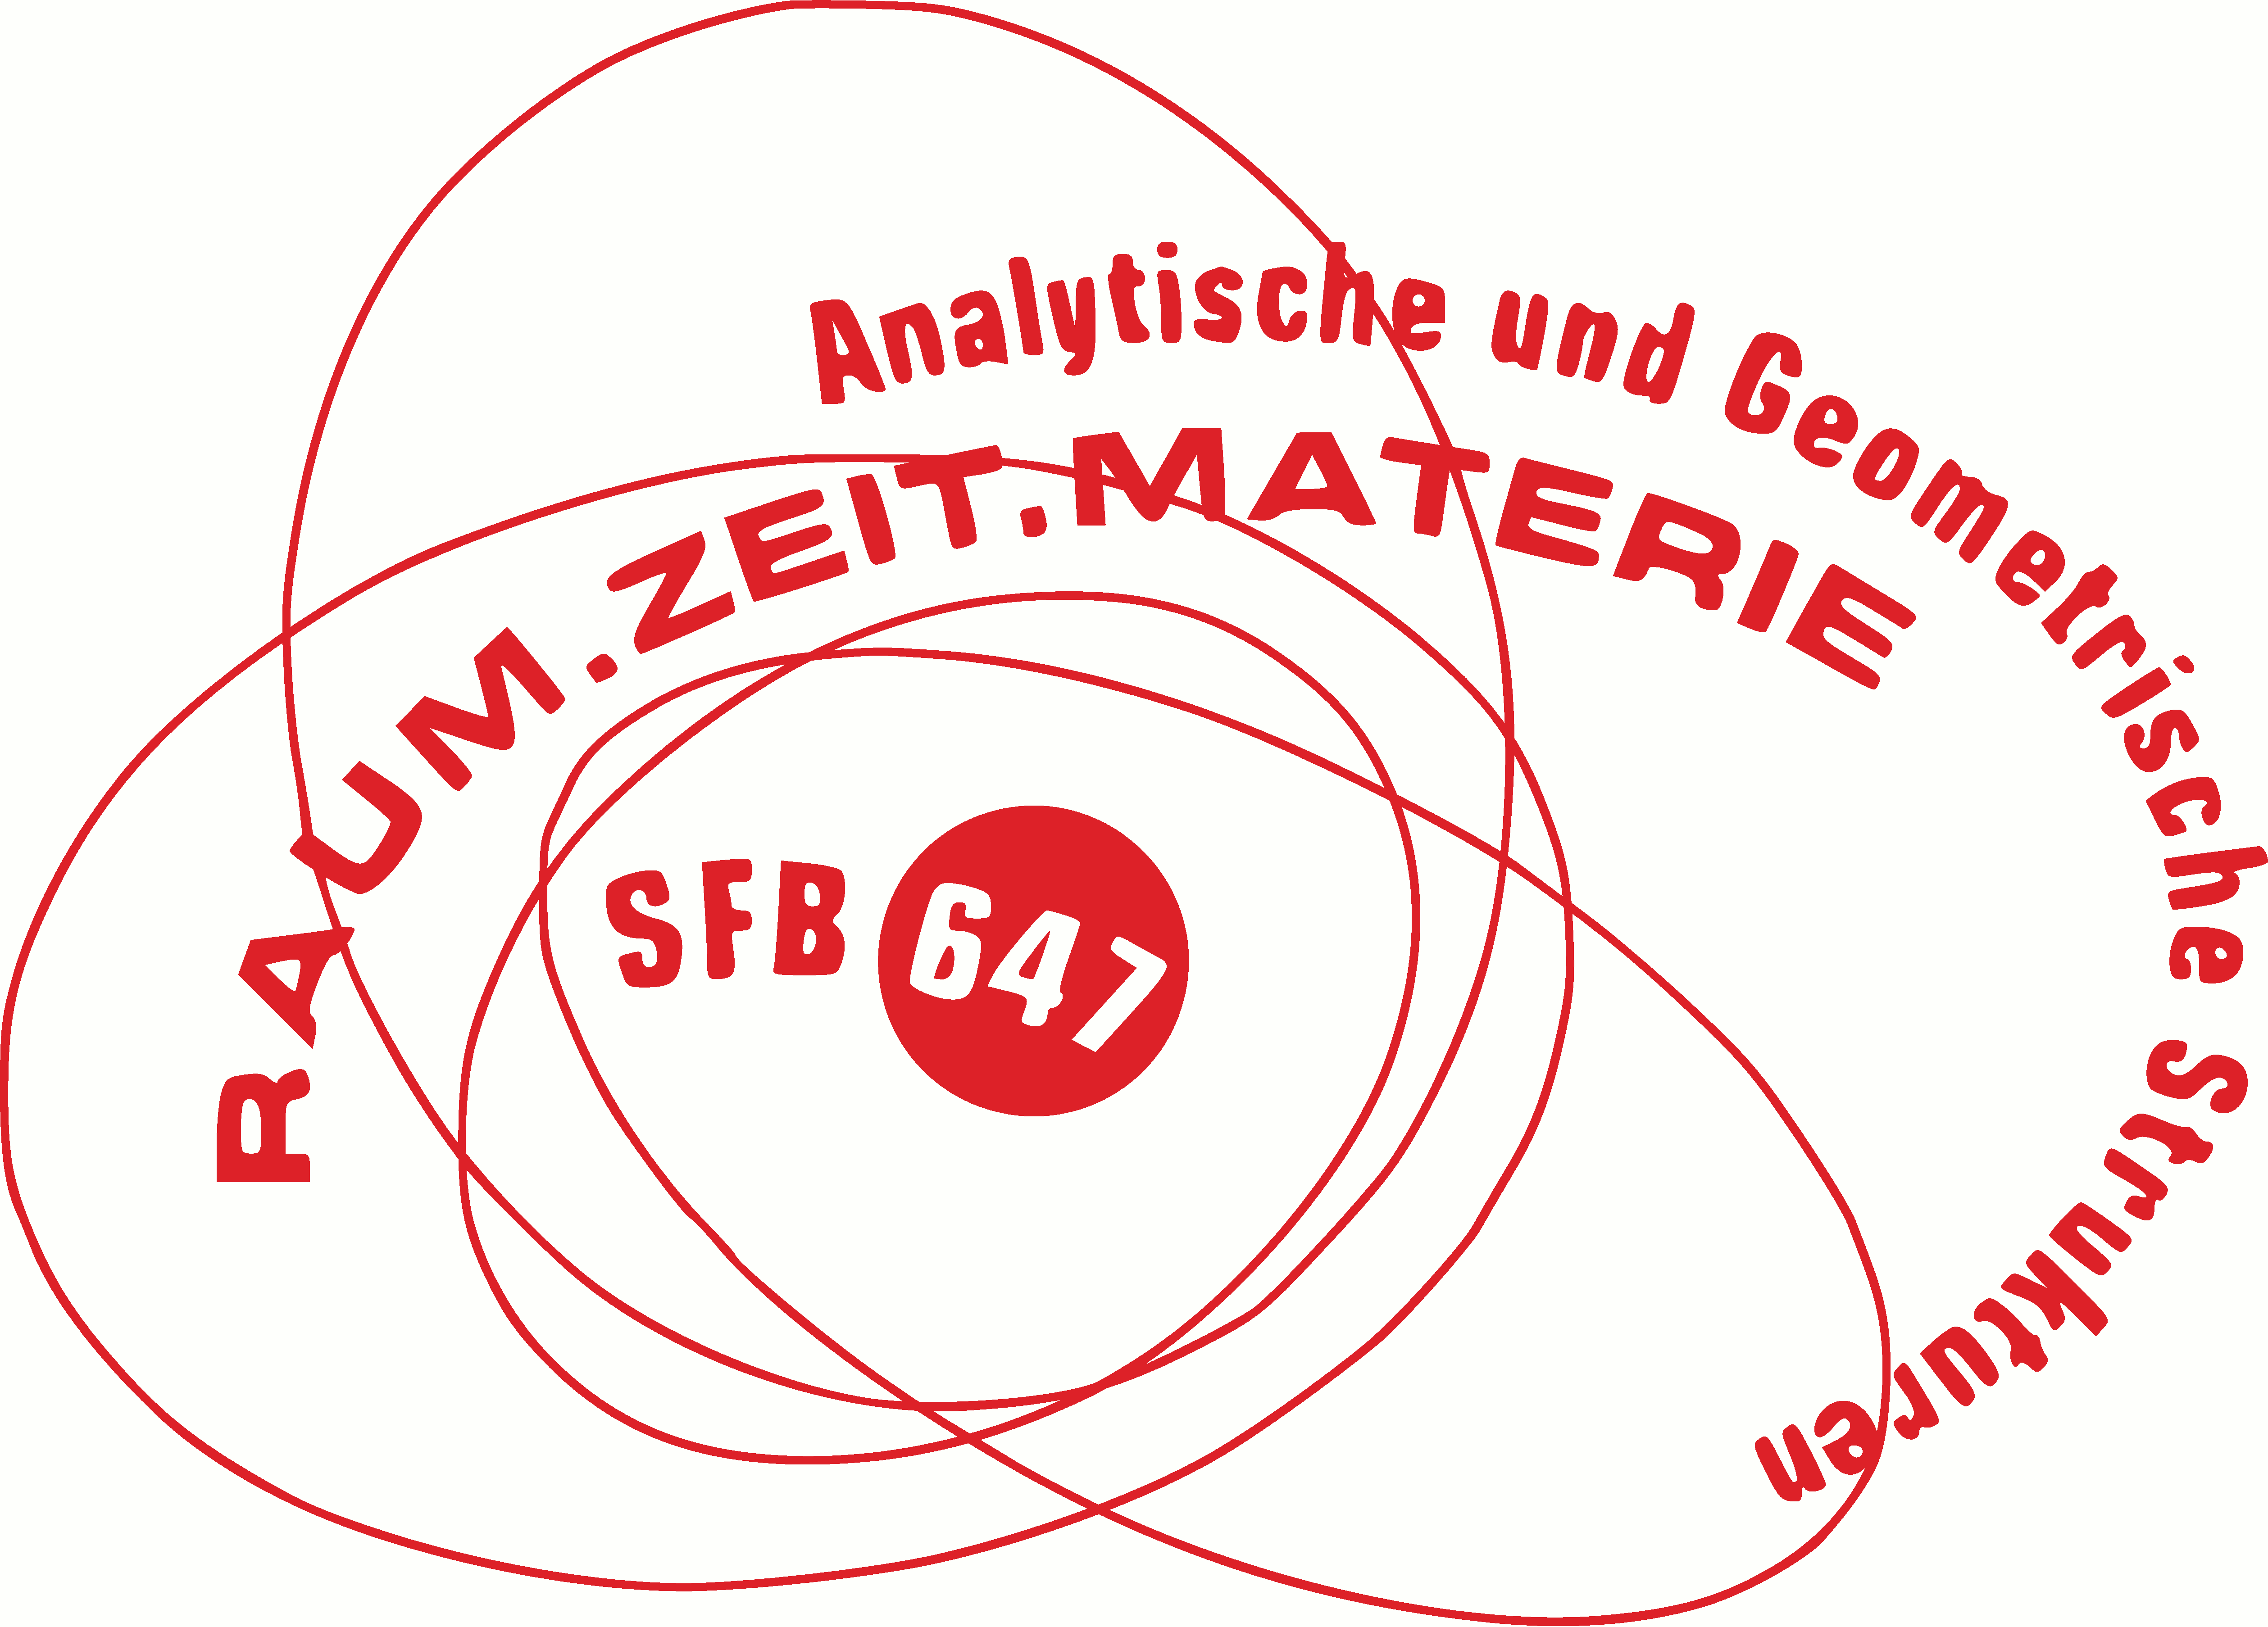 SFB 647 - Raum, Zeit, Materie